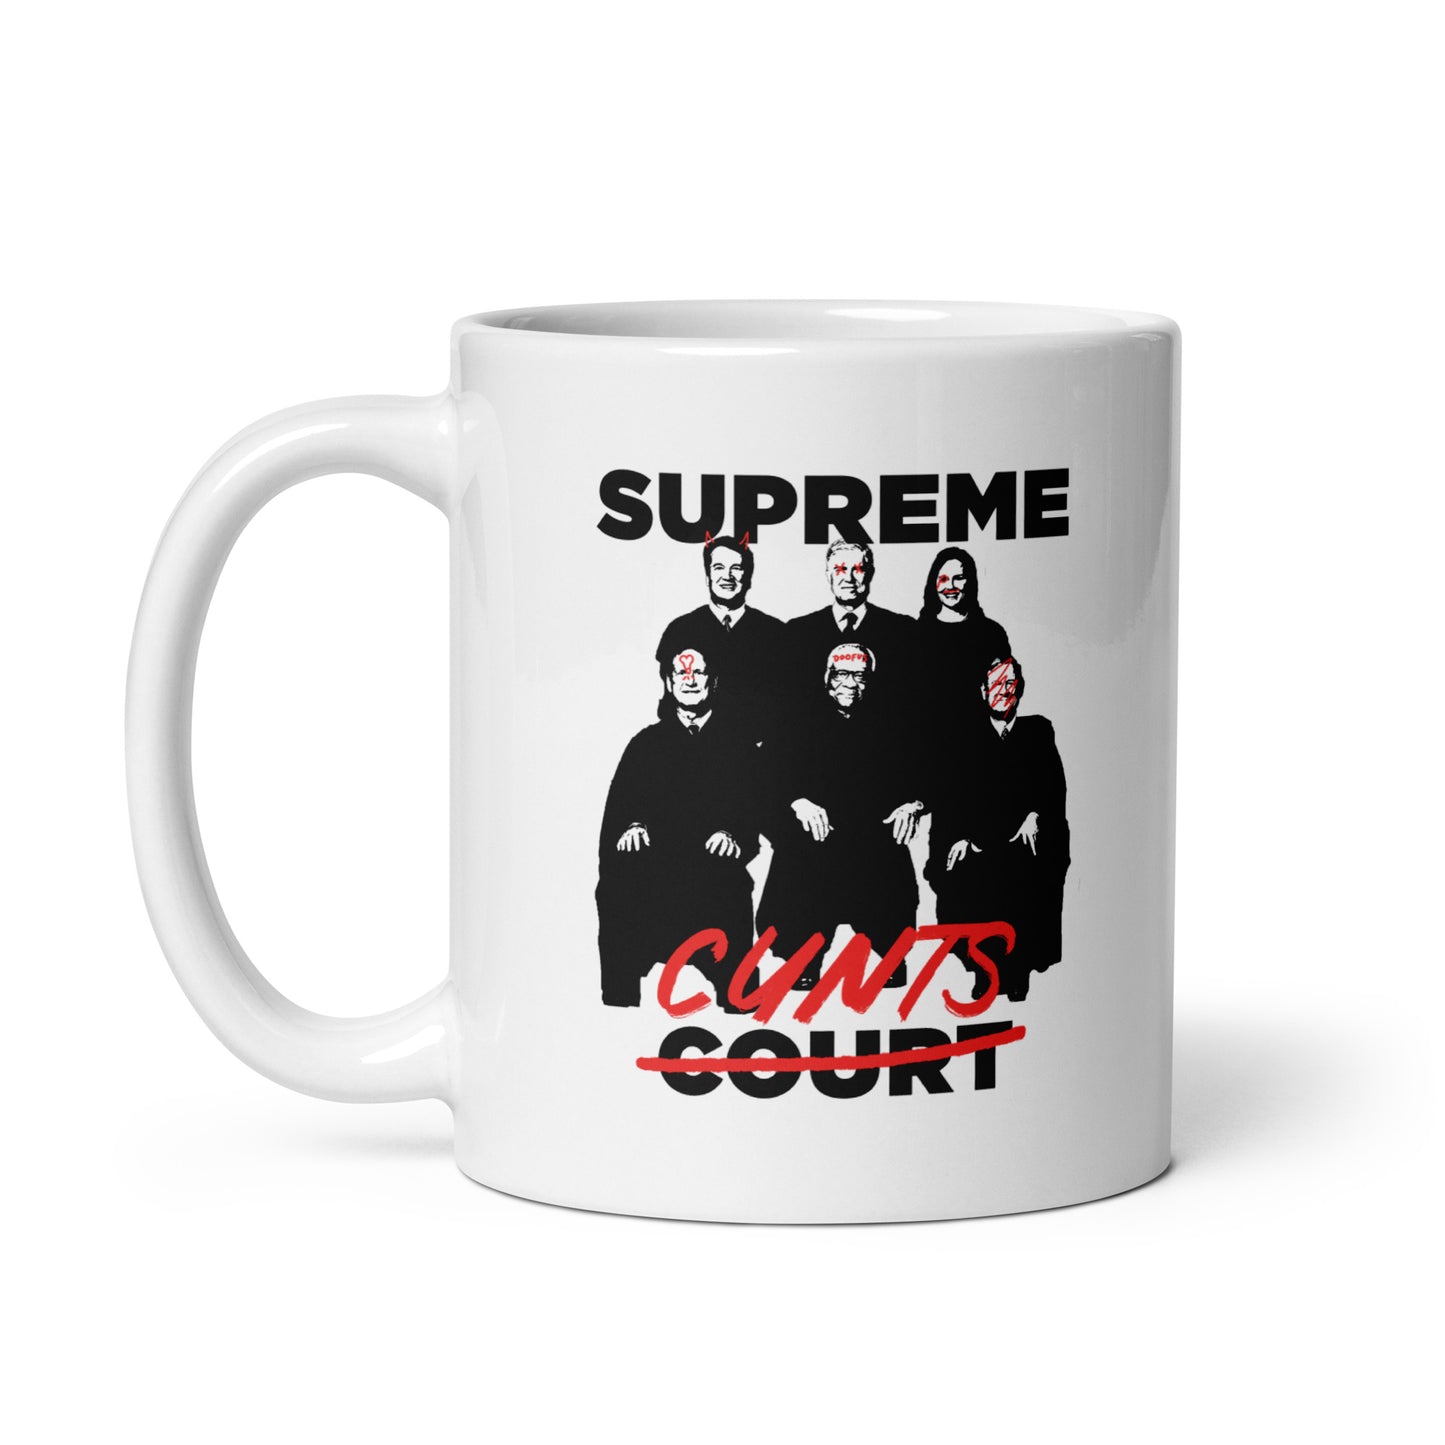 Supreme Cunts mug